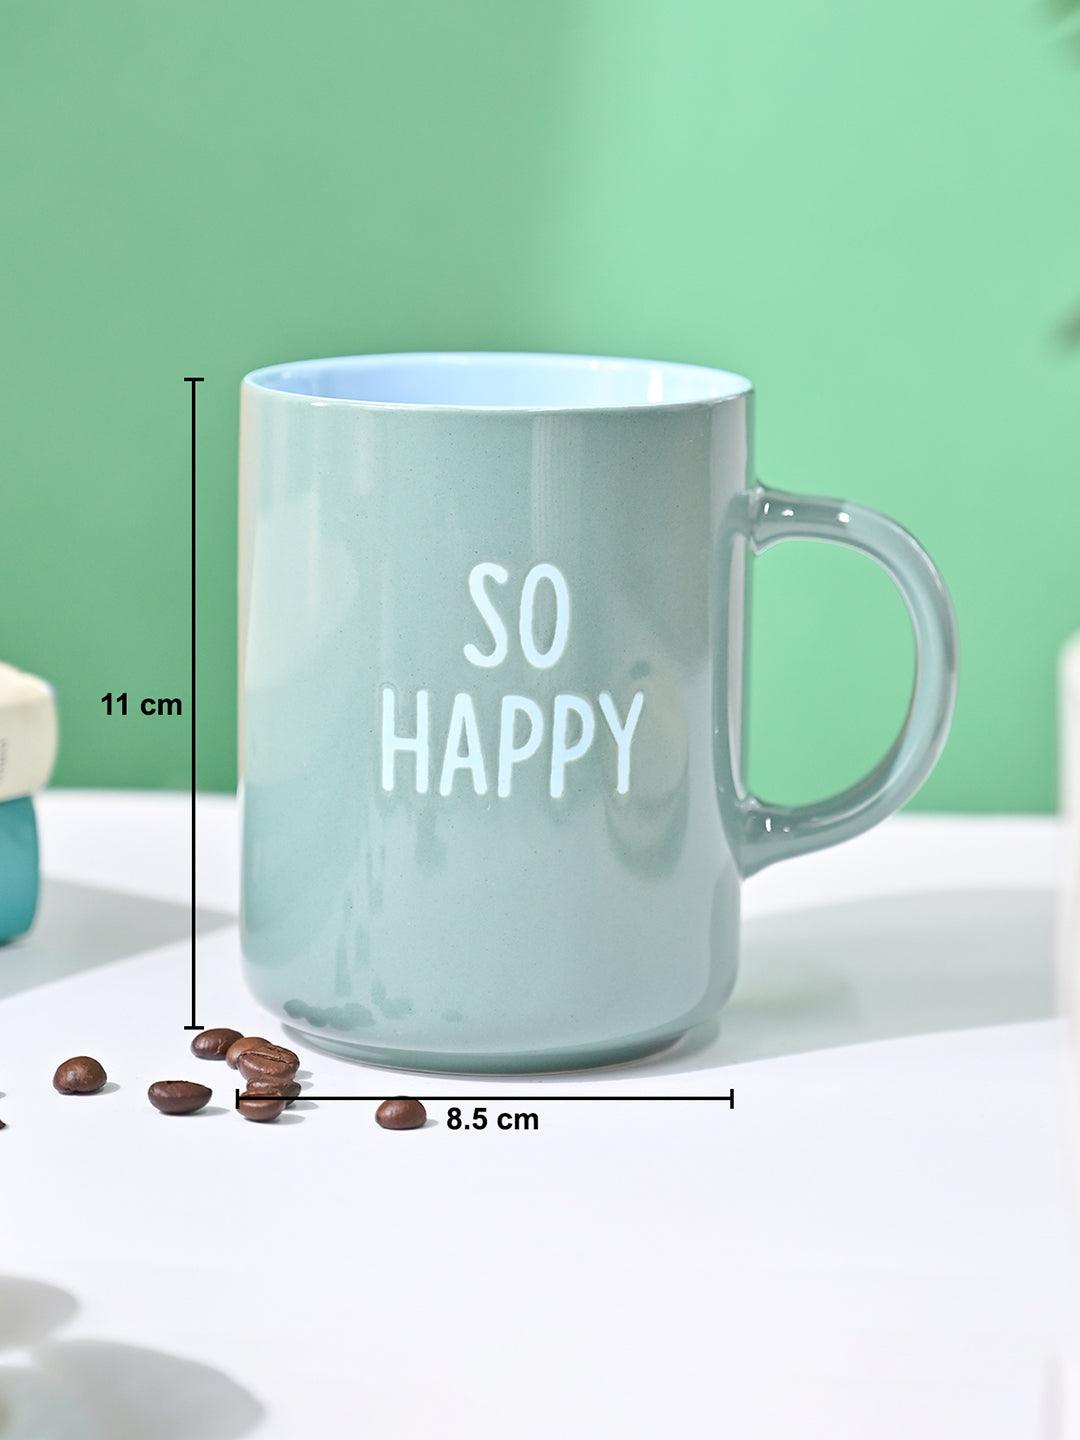 VON CASA Green Mug (So Happy) - 420Ml